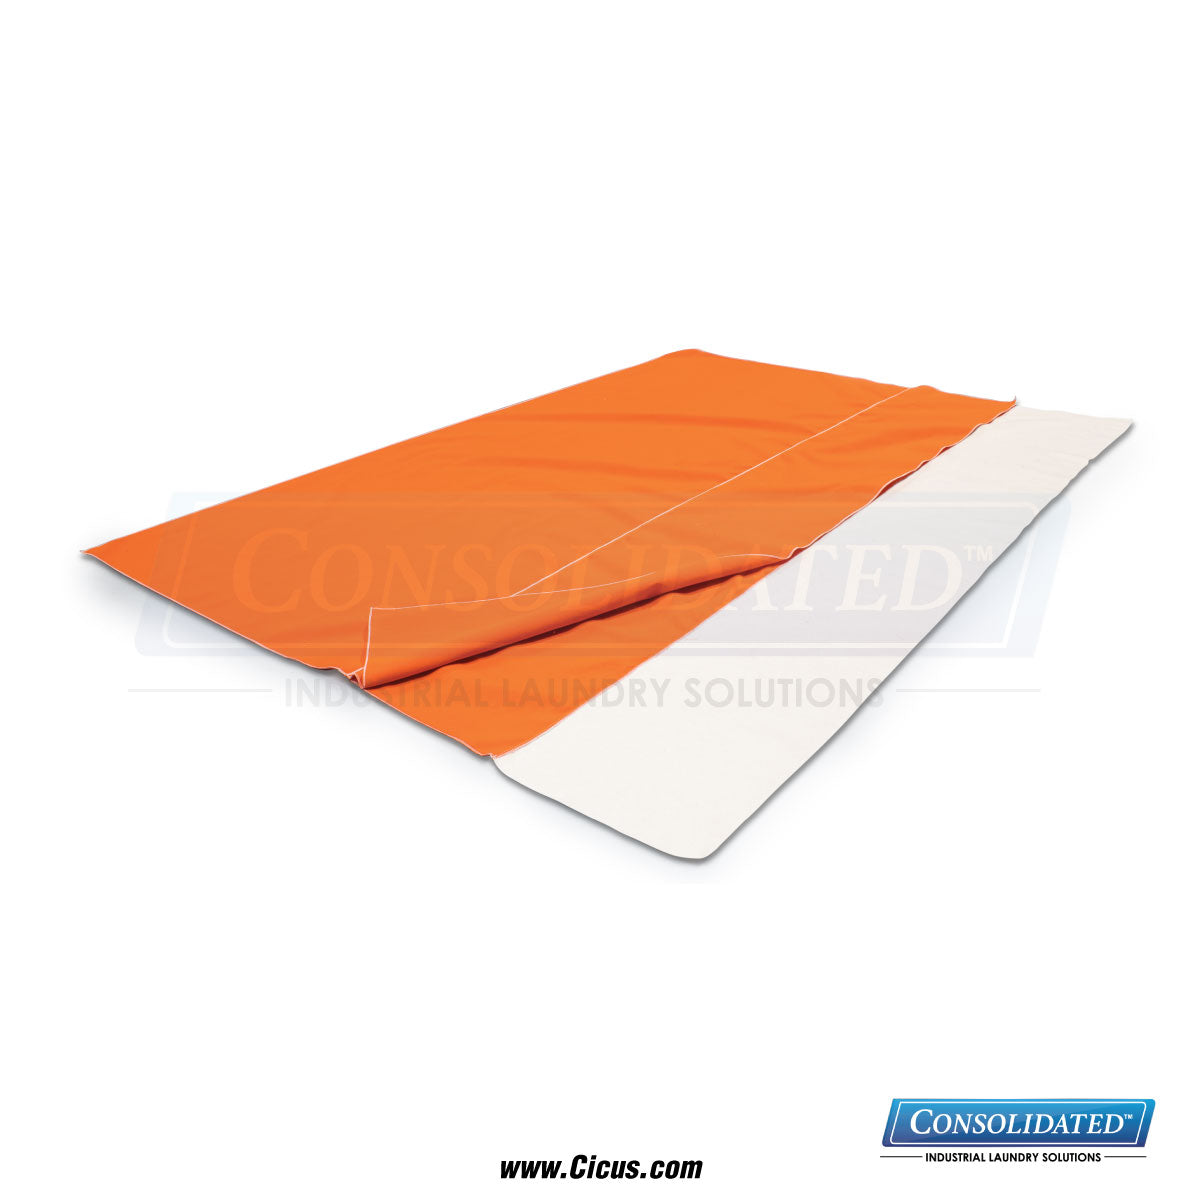 Flatwork ironer Orange Mesh Wax & Clean Cloth - High-Temperature - 65"x 115" [EURONOMEXXL]